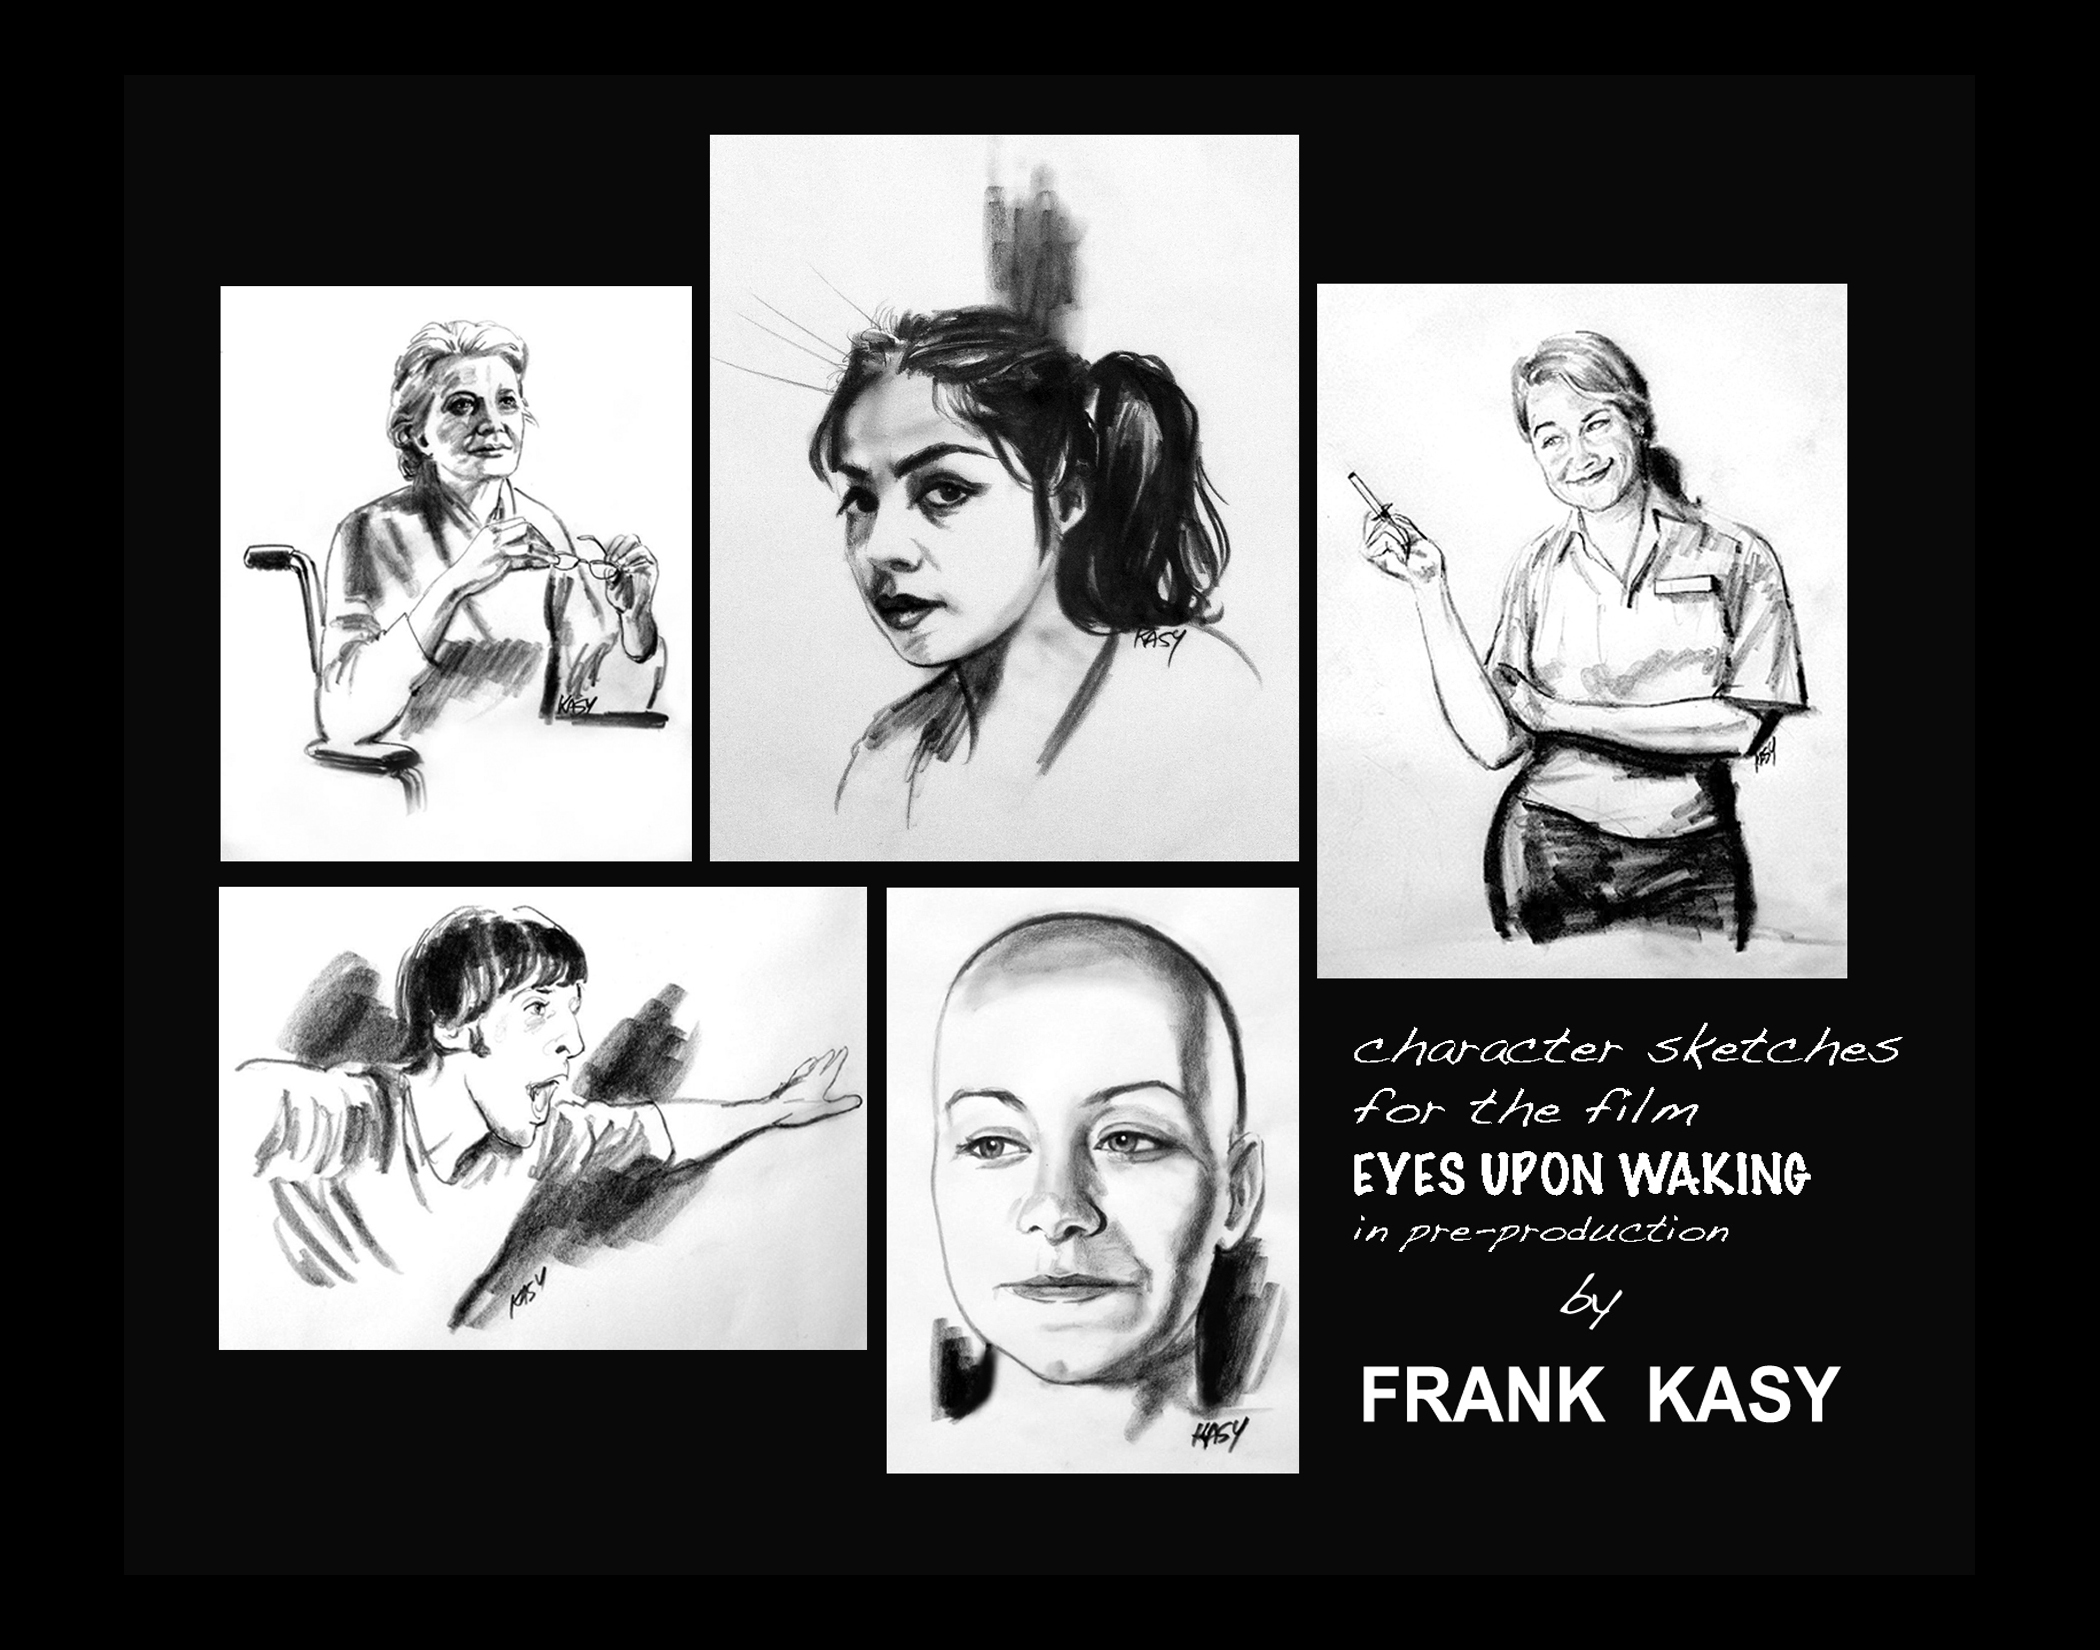 Frank Kasy